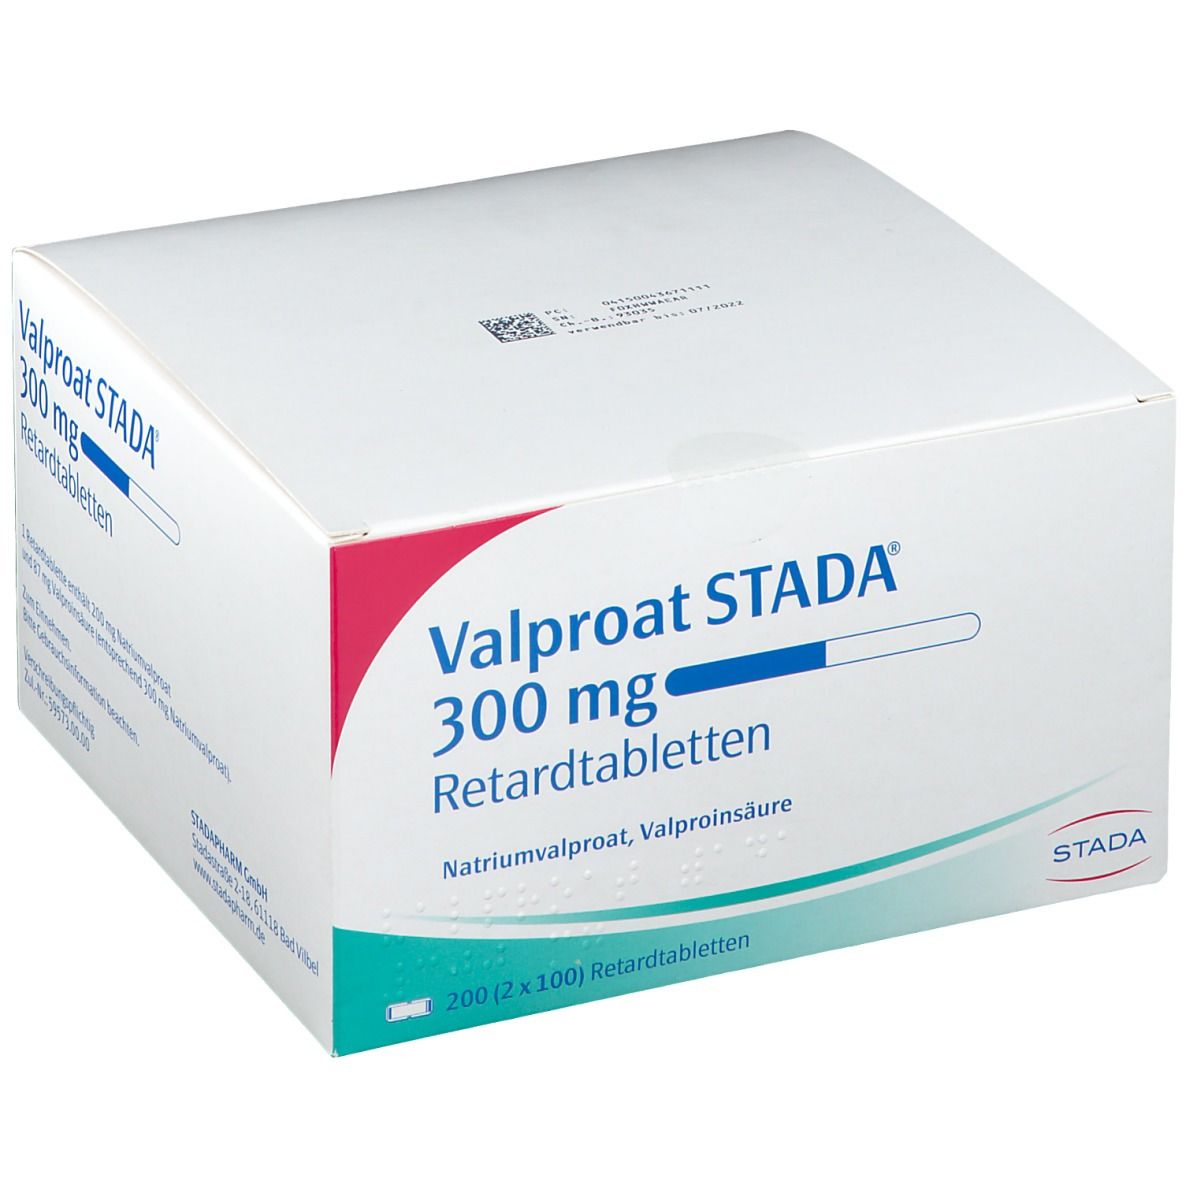 Valproat STADA® 300 mg